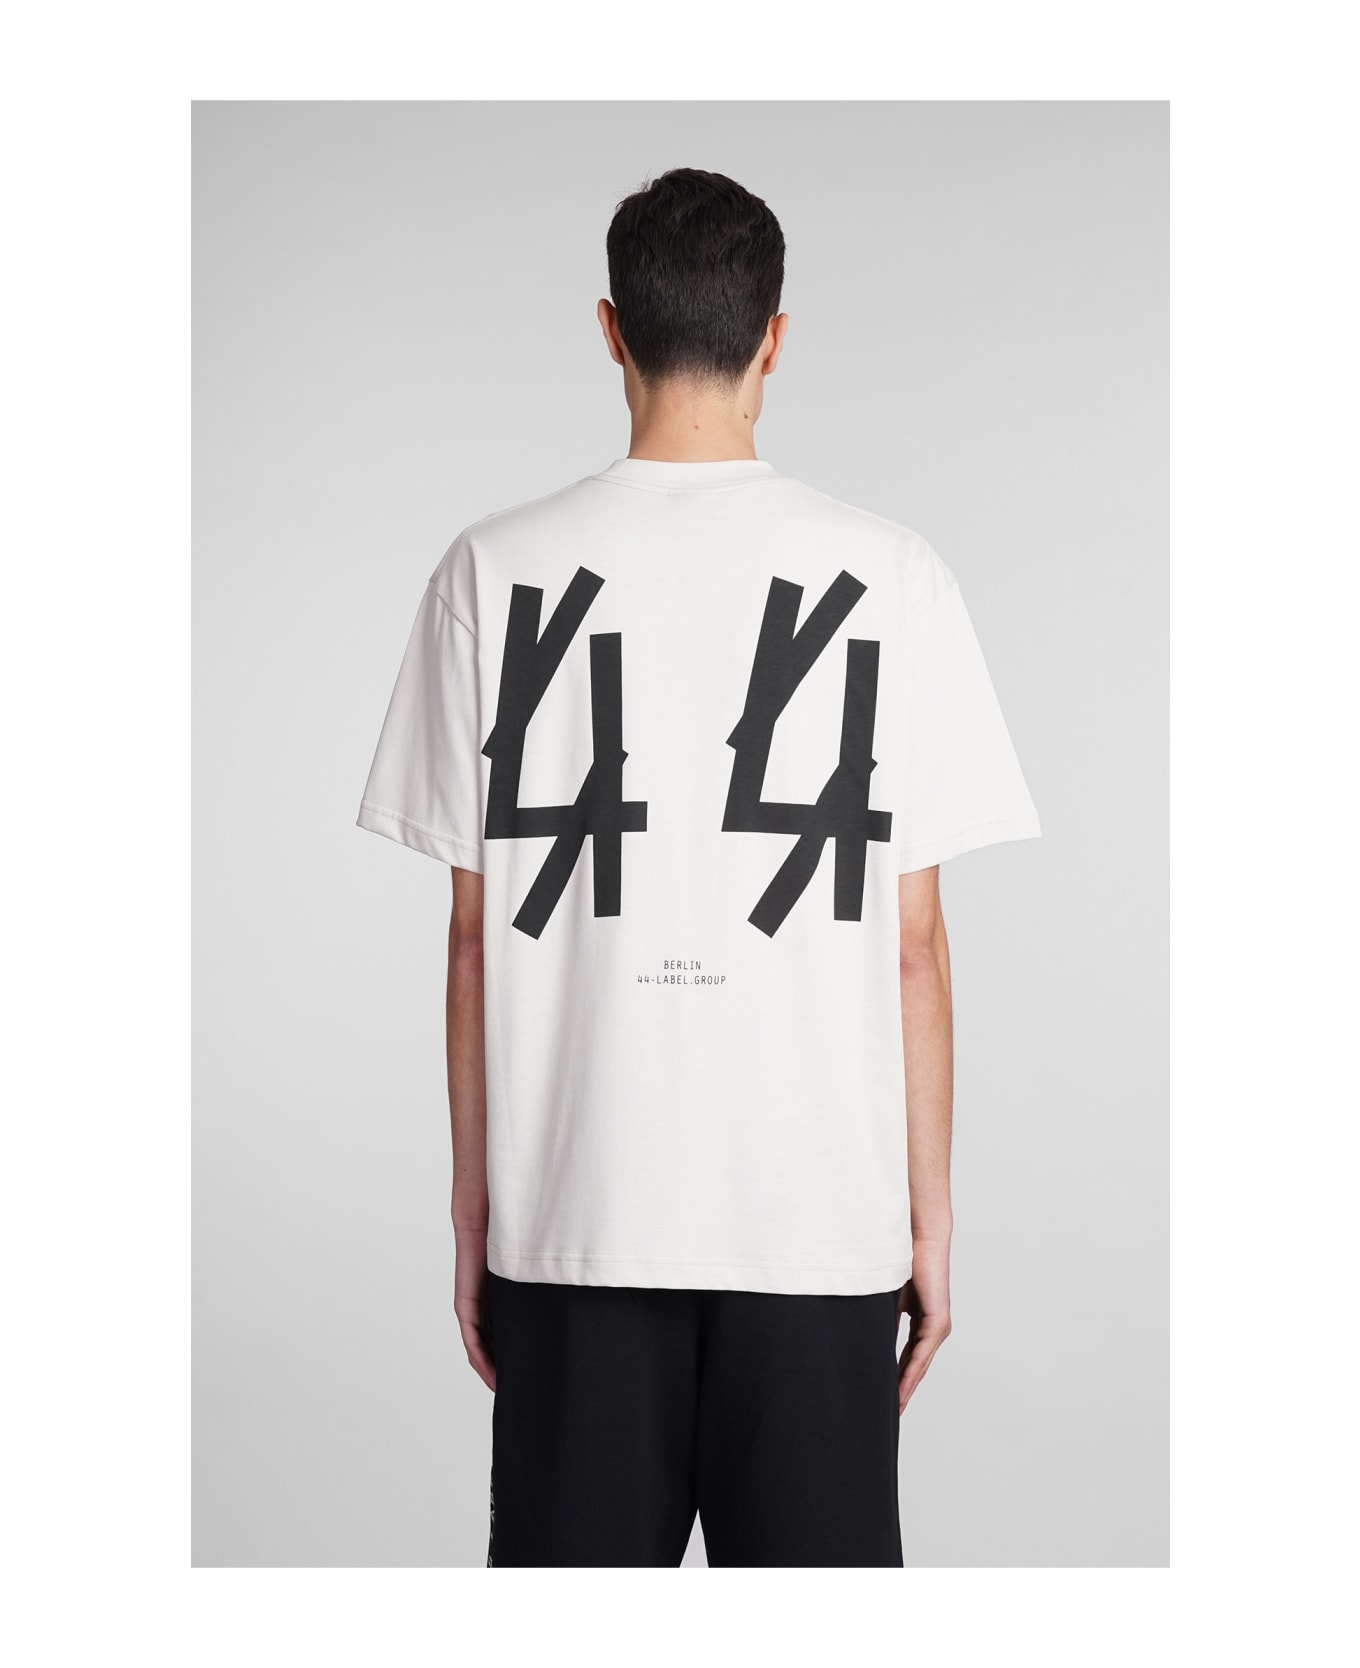 44 Label Group T-shirt In Beige Cotton - beige